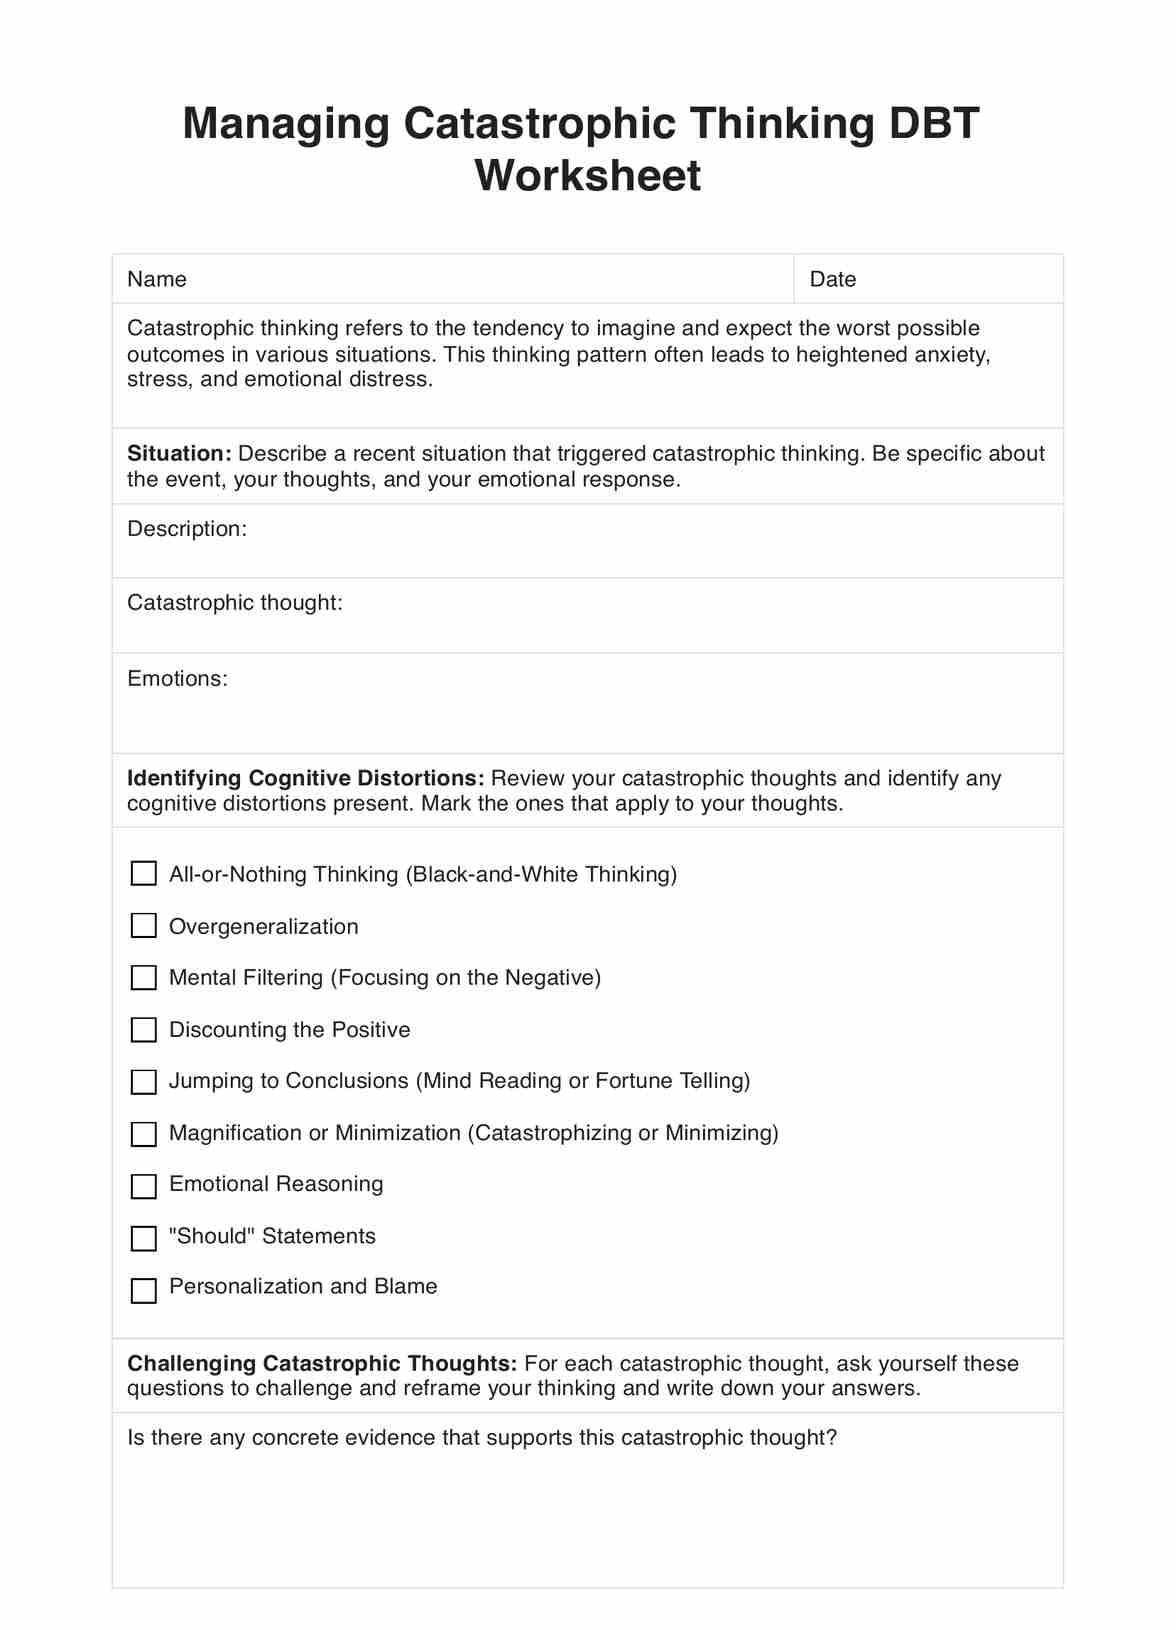 Managing Catastrophic Thinking DBT Worksheet PDF Example